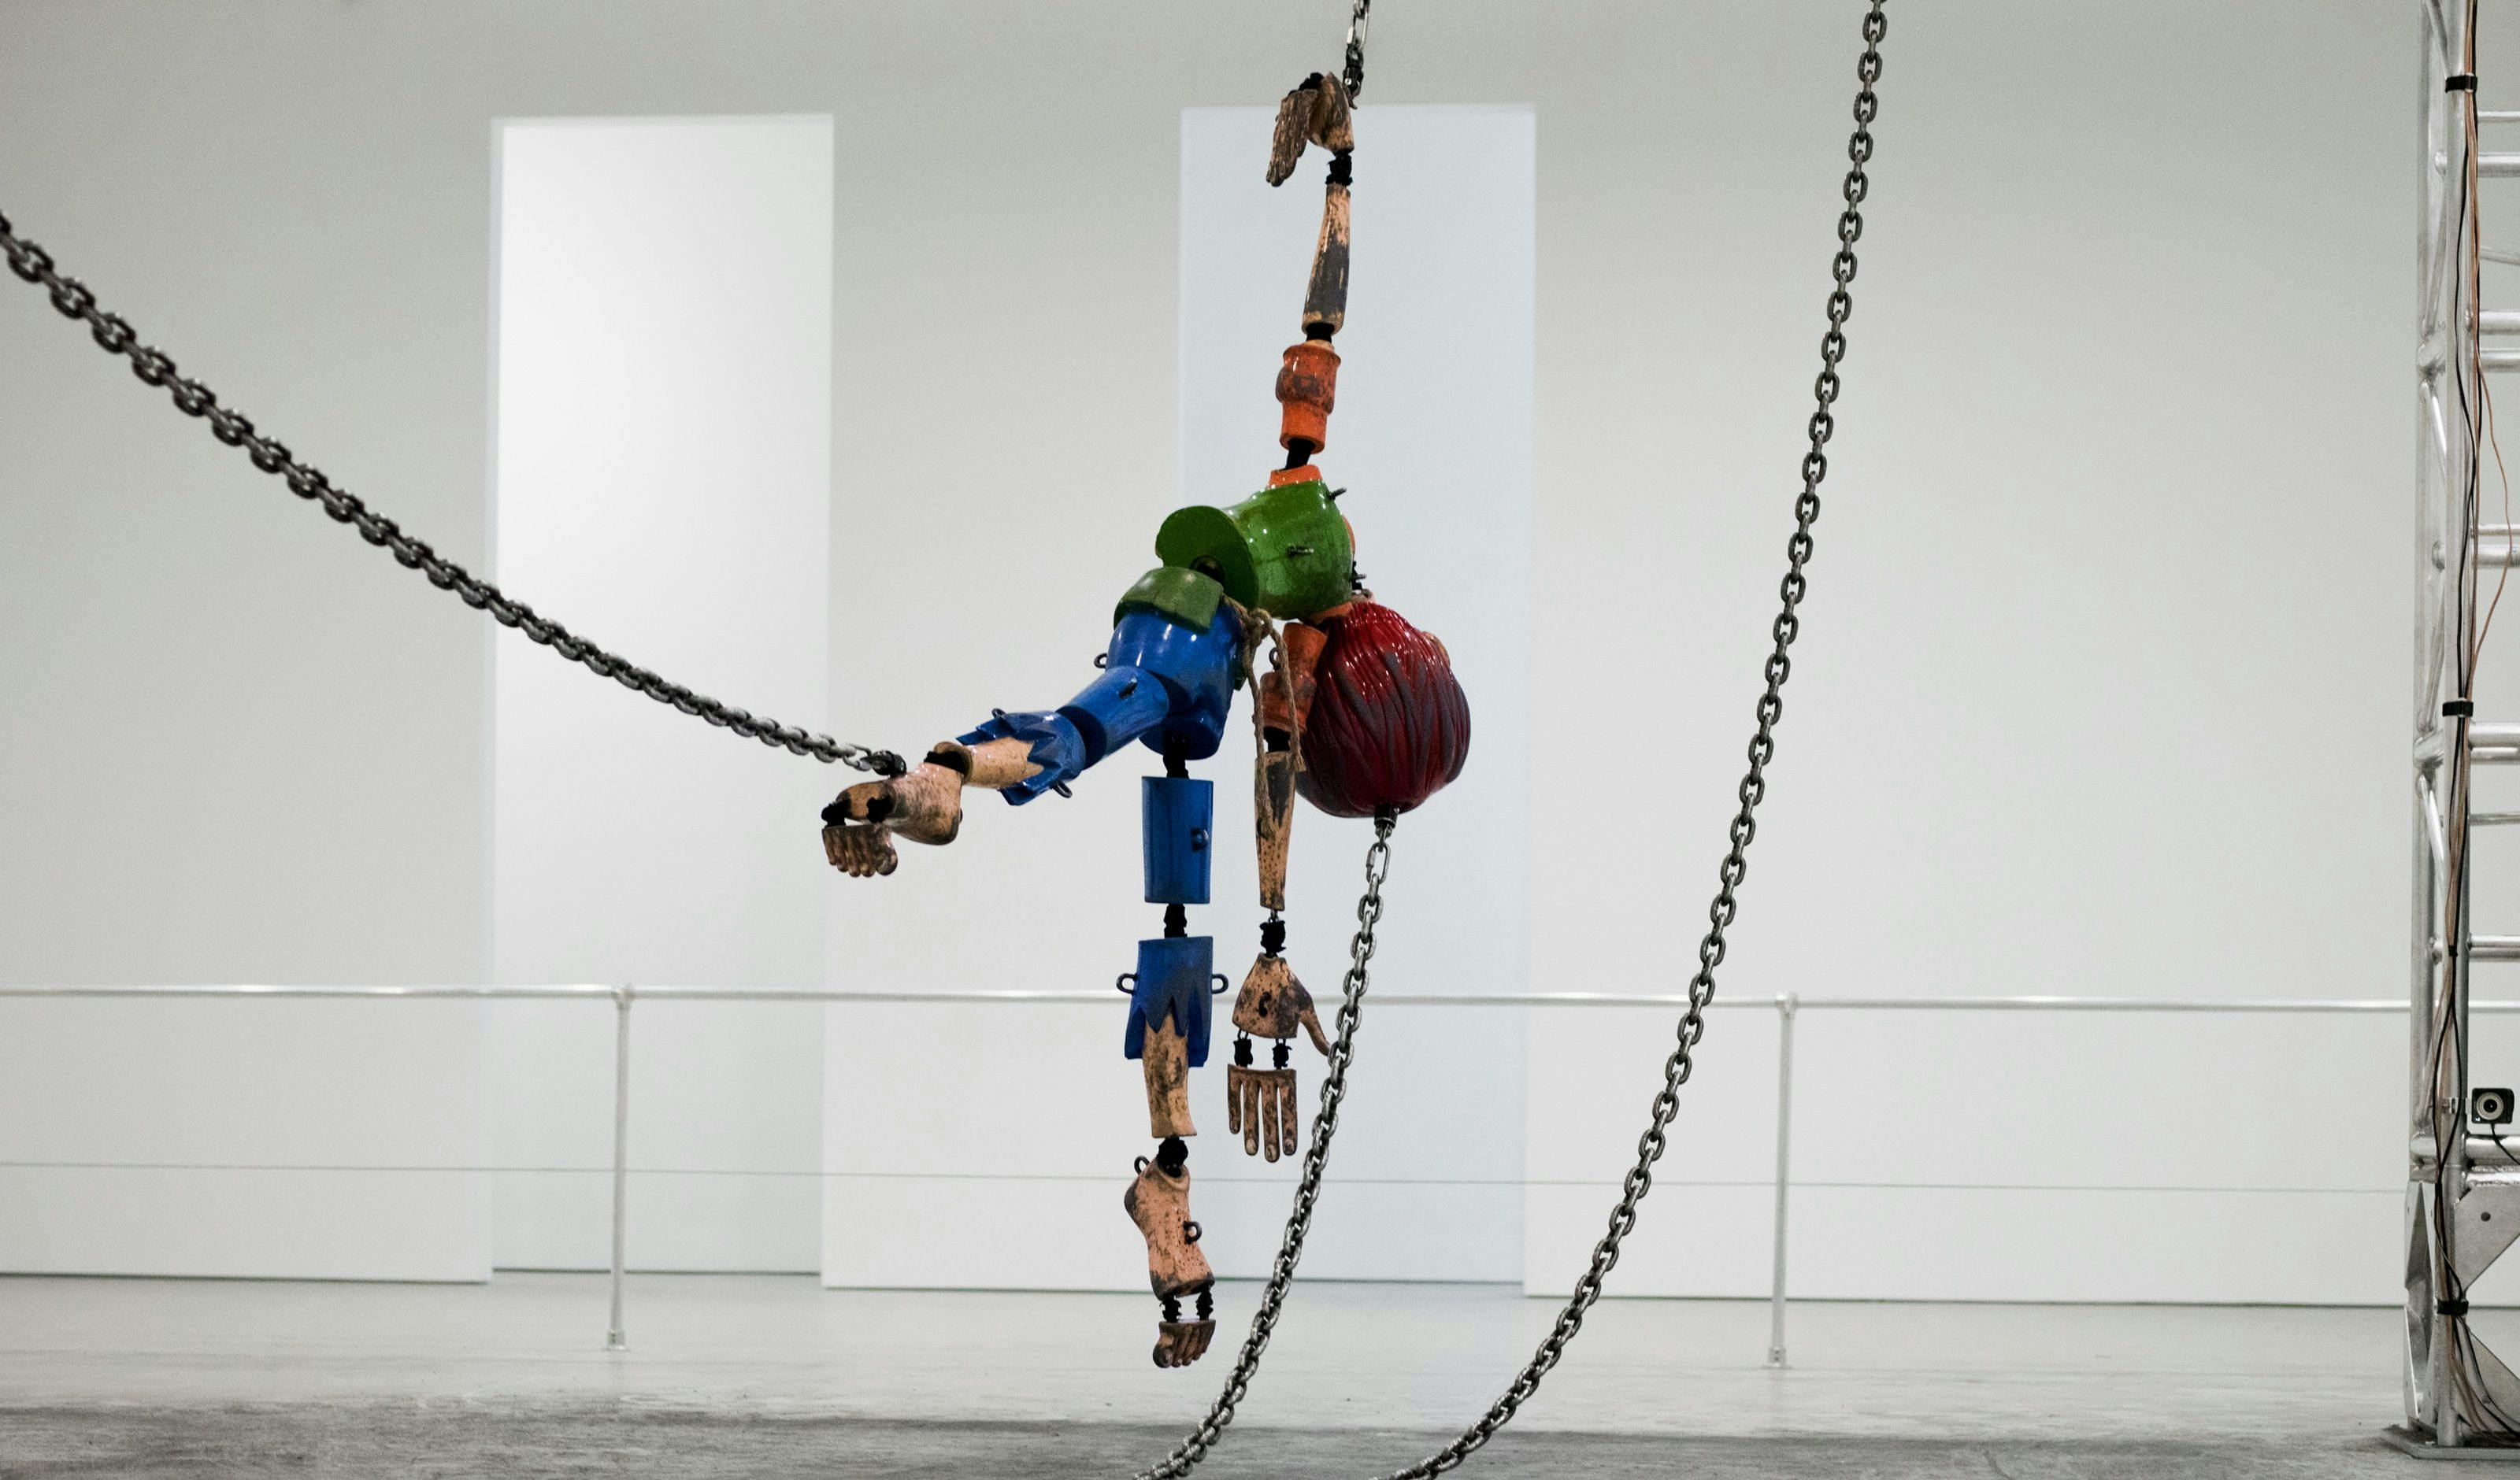 Installation view of the exhibition Jordan Wolfson at David Zwirner New York, dated 2016.